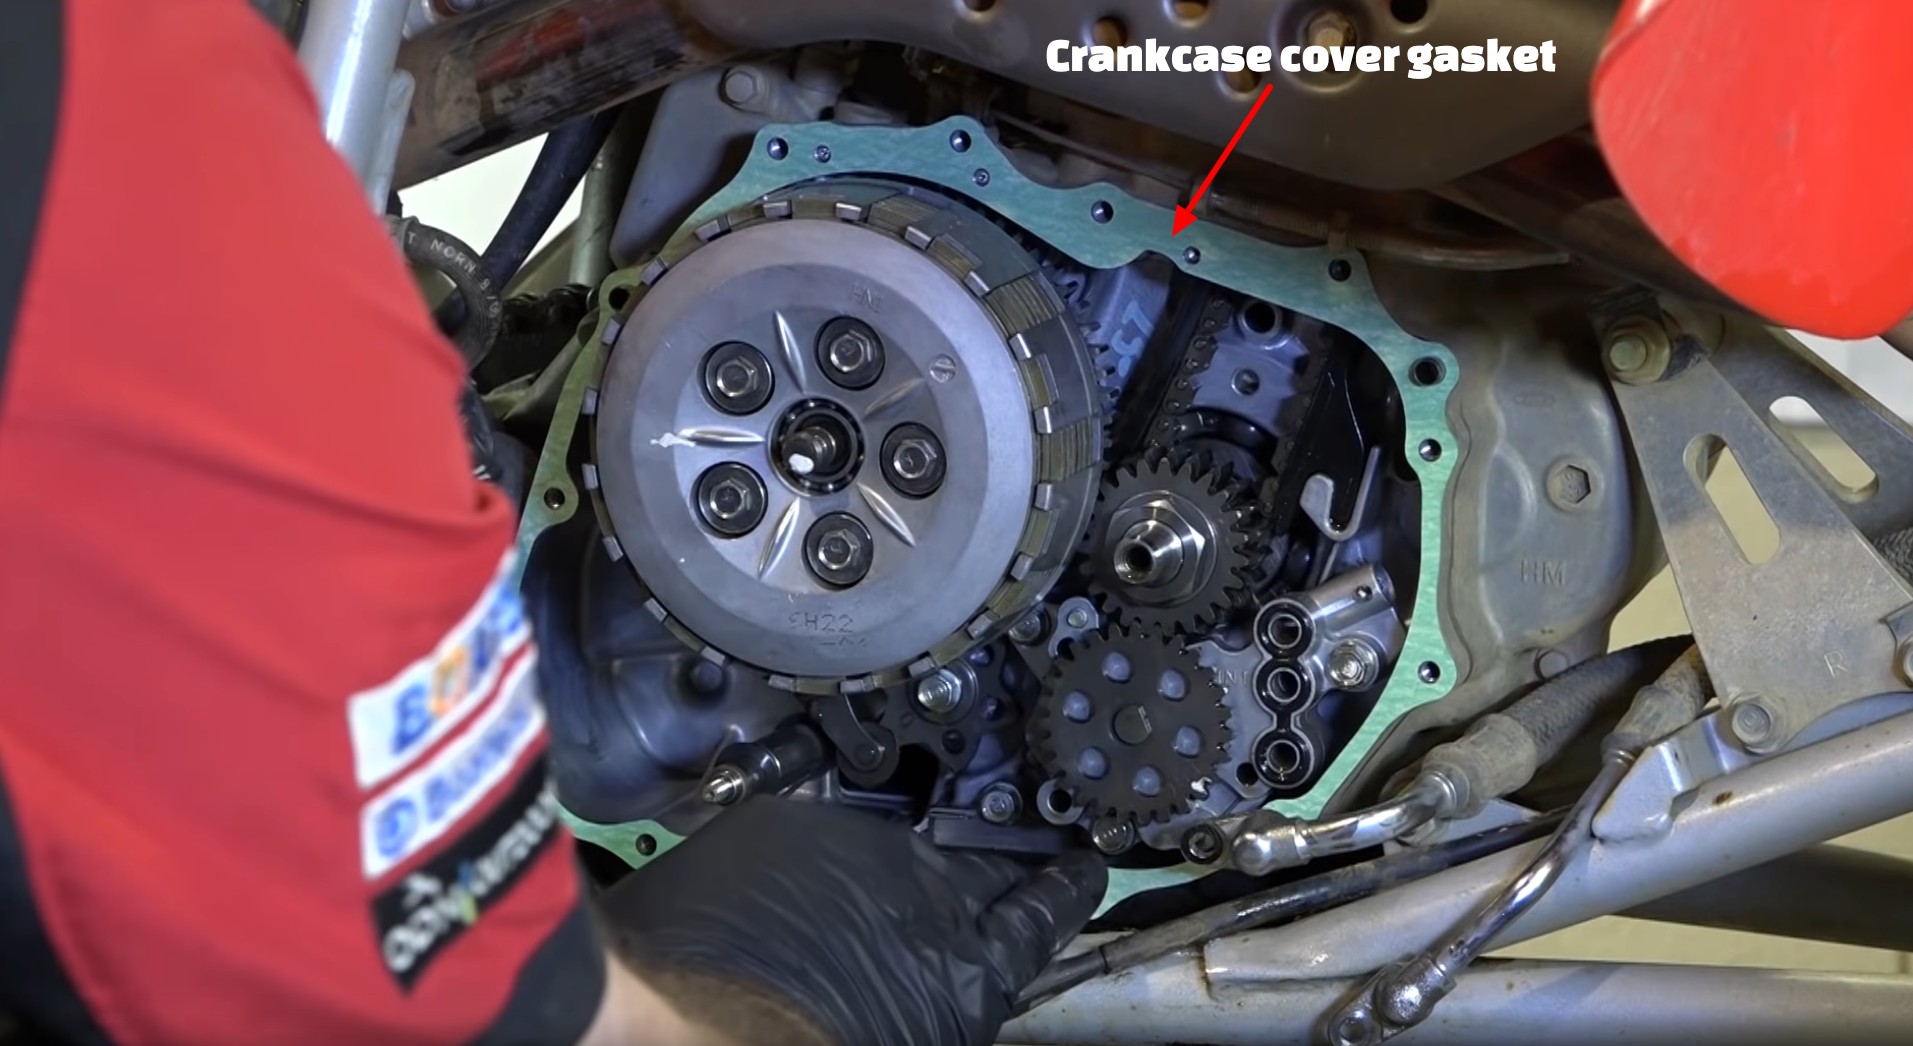 Honda TRX400 crankcase cover gasket